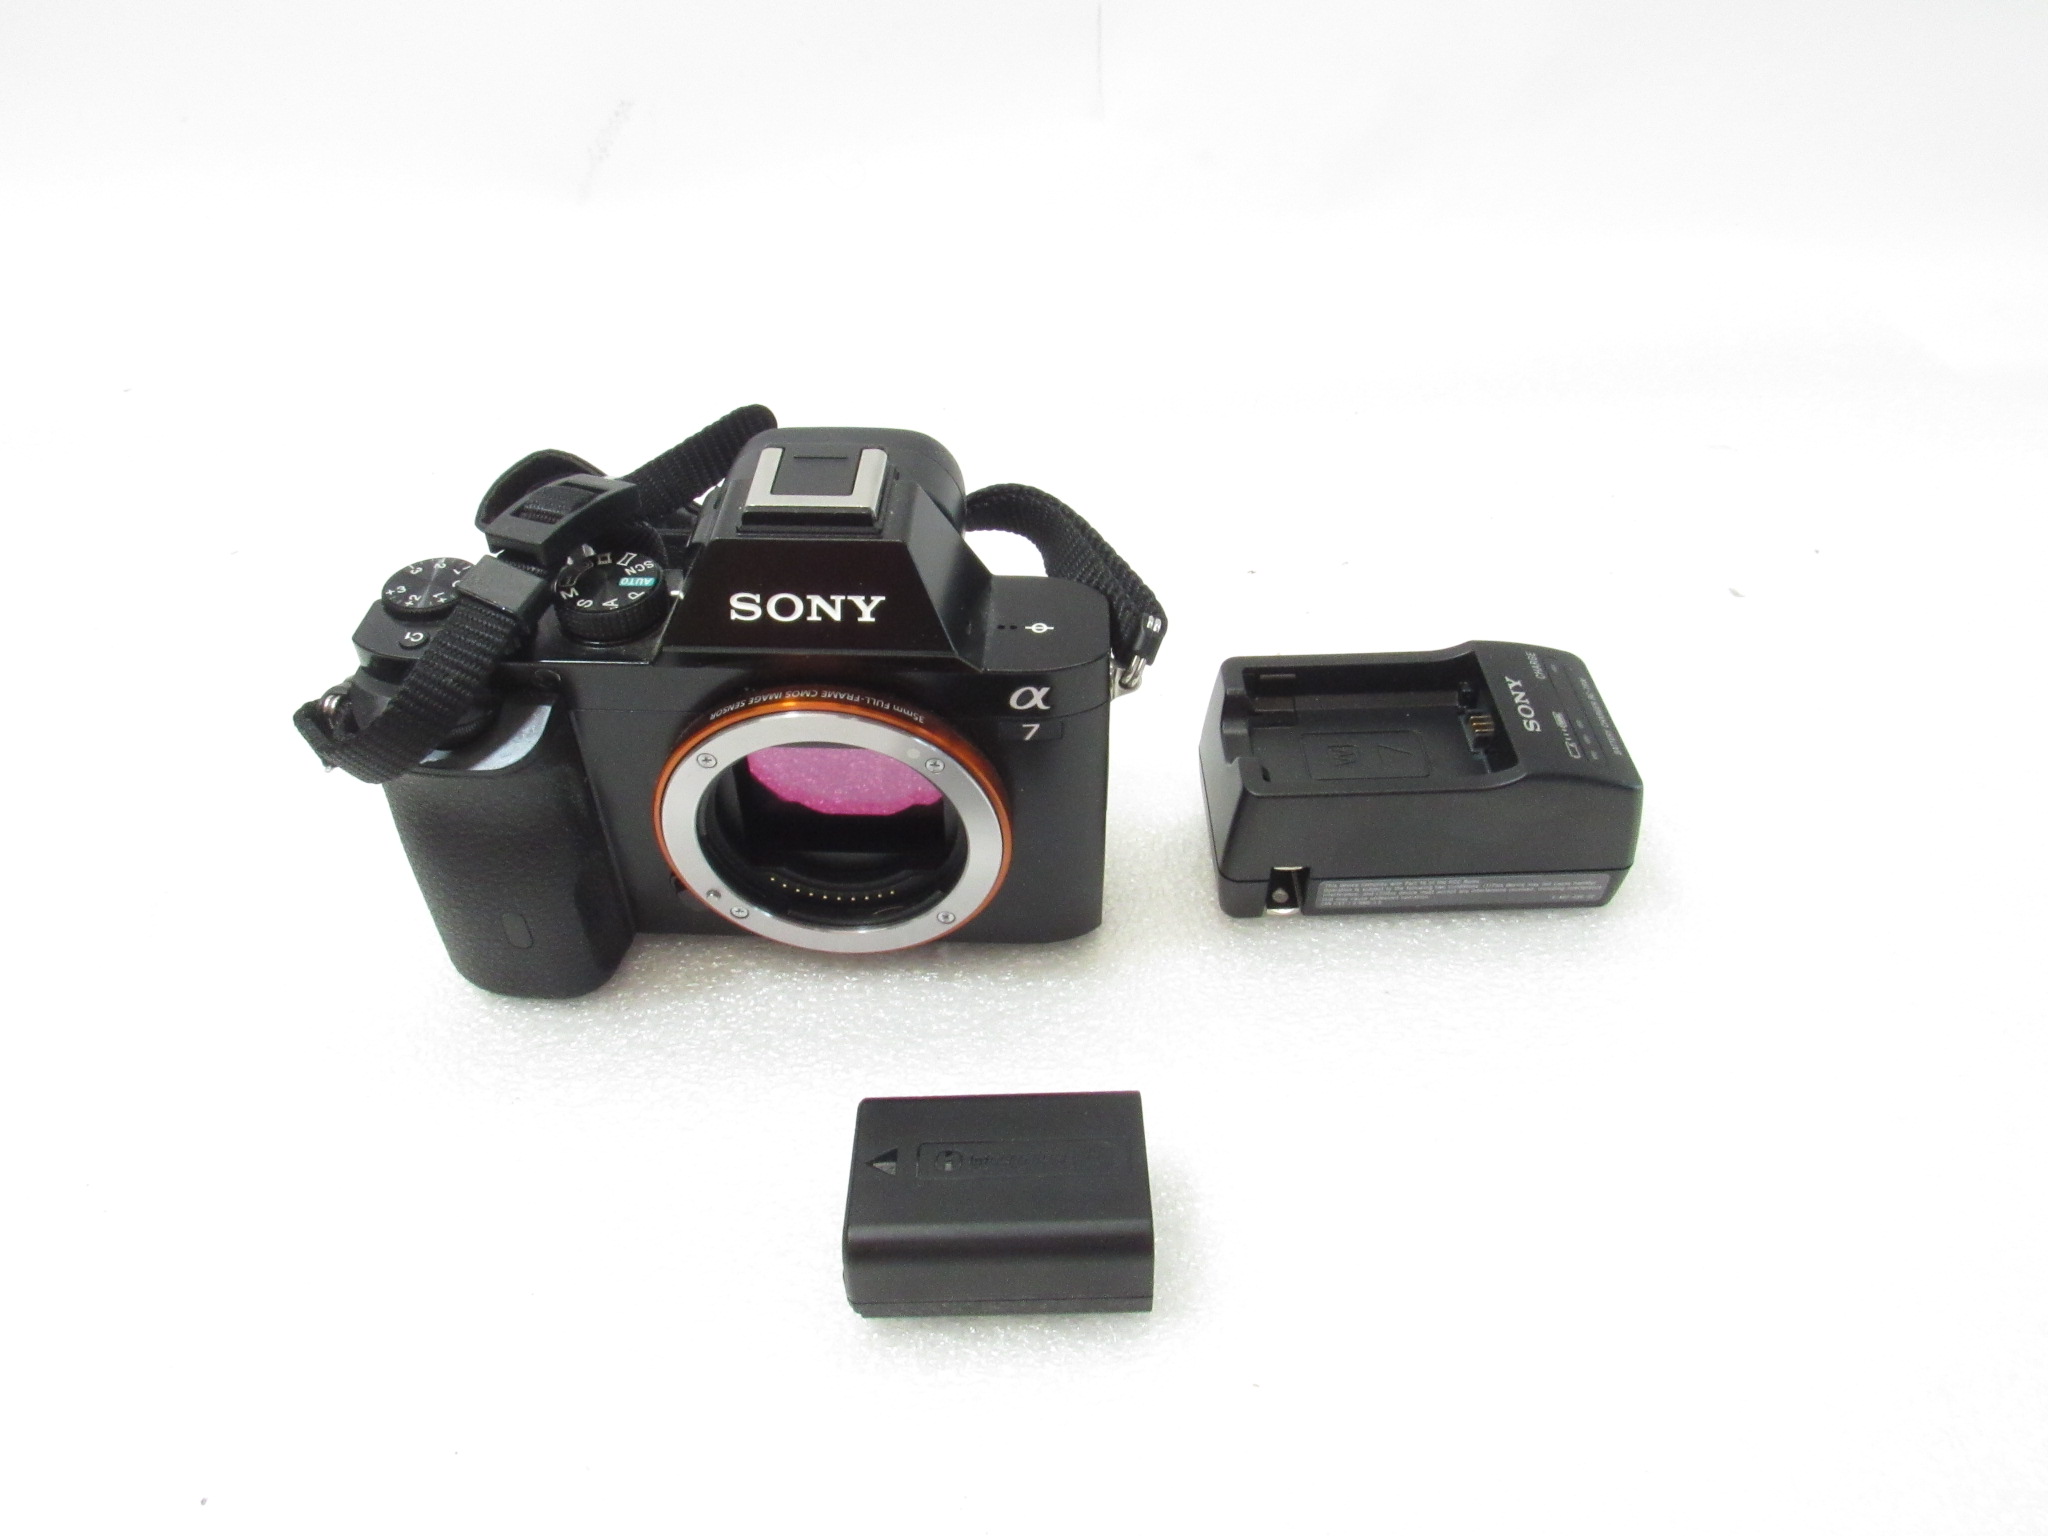 Sony Alpha A7 II 24.3MP Digital Camera - Black (Body Only) for sale online